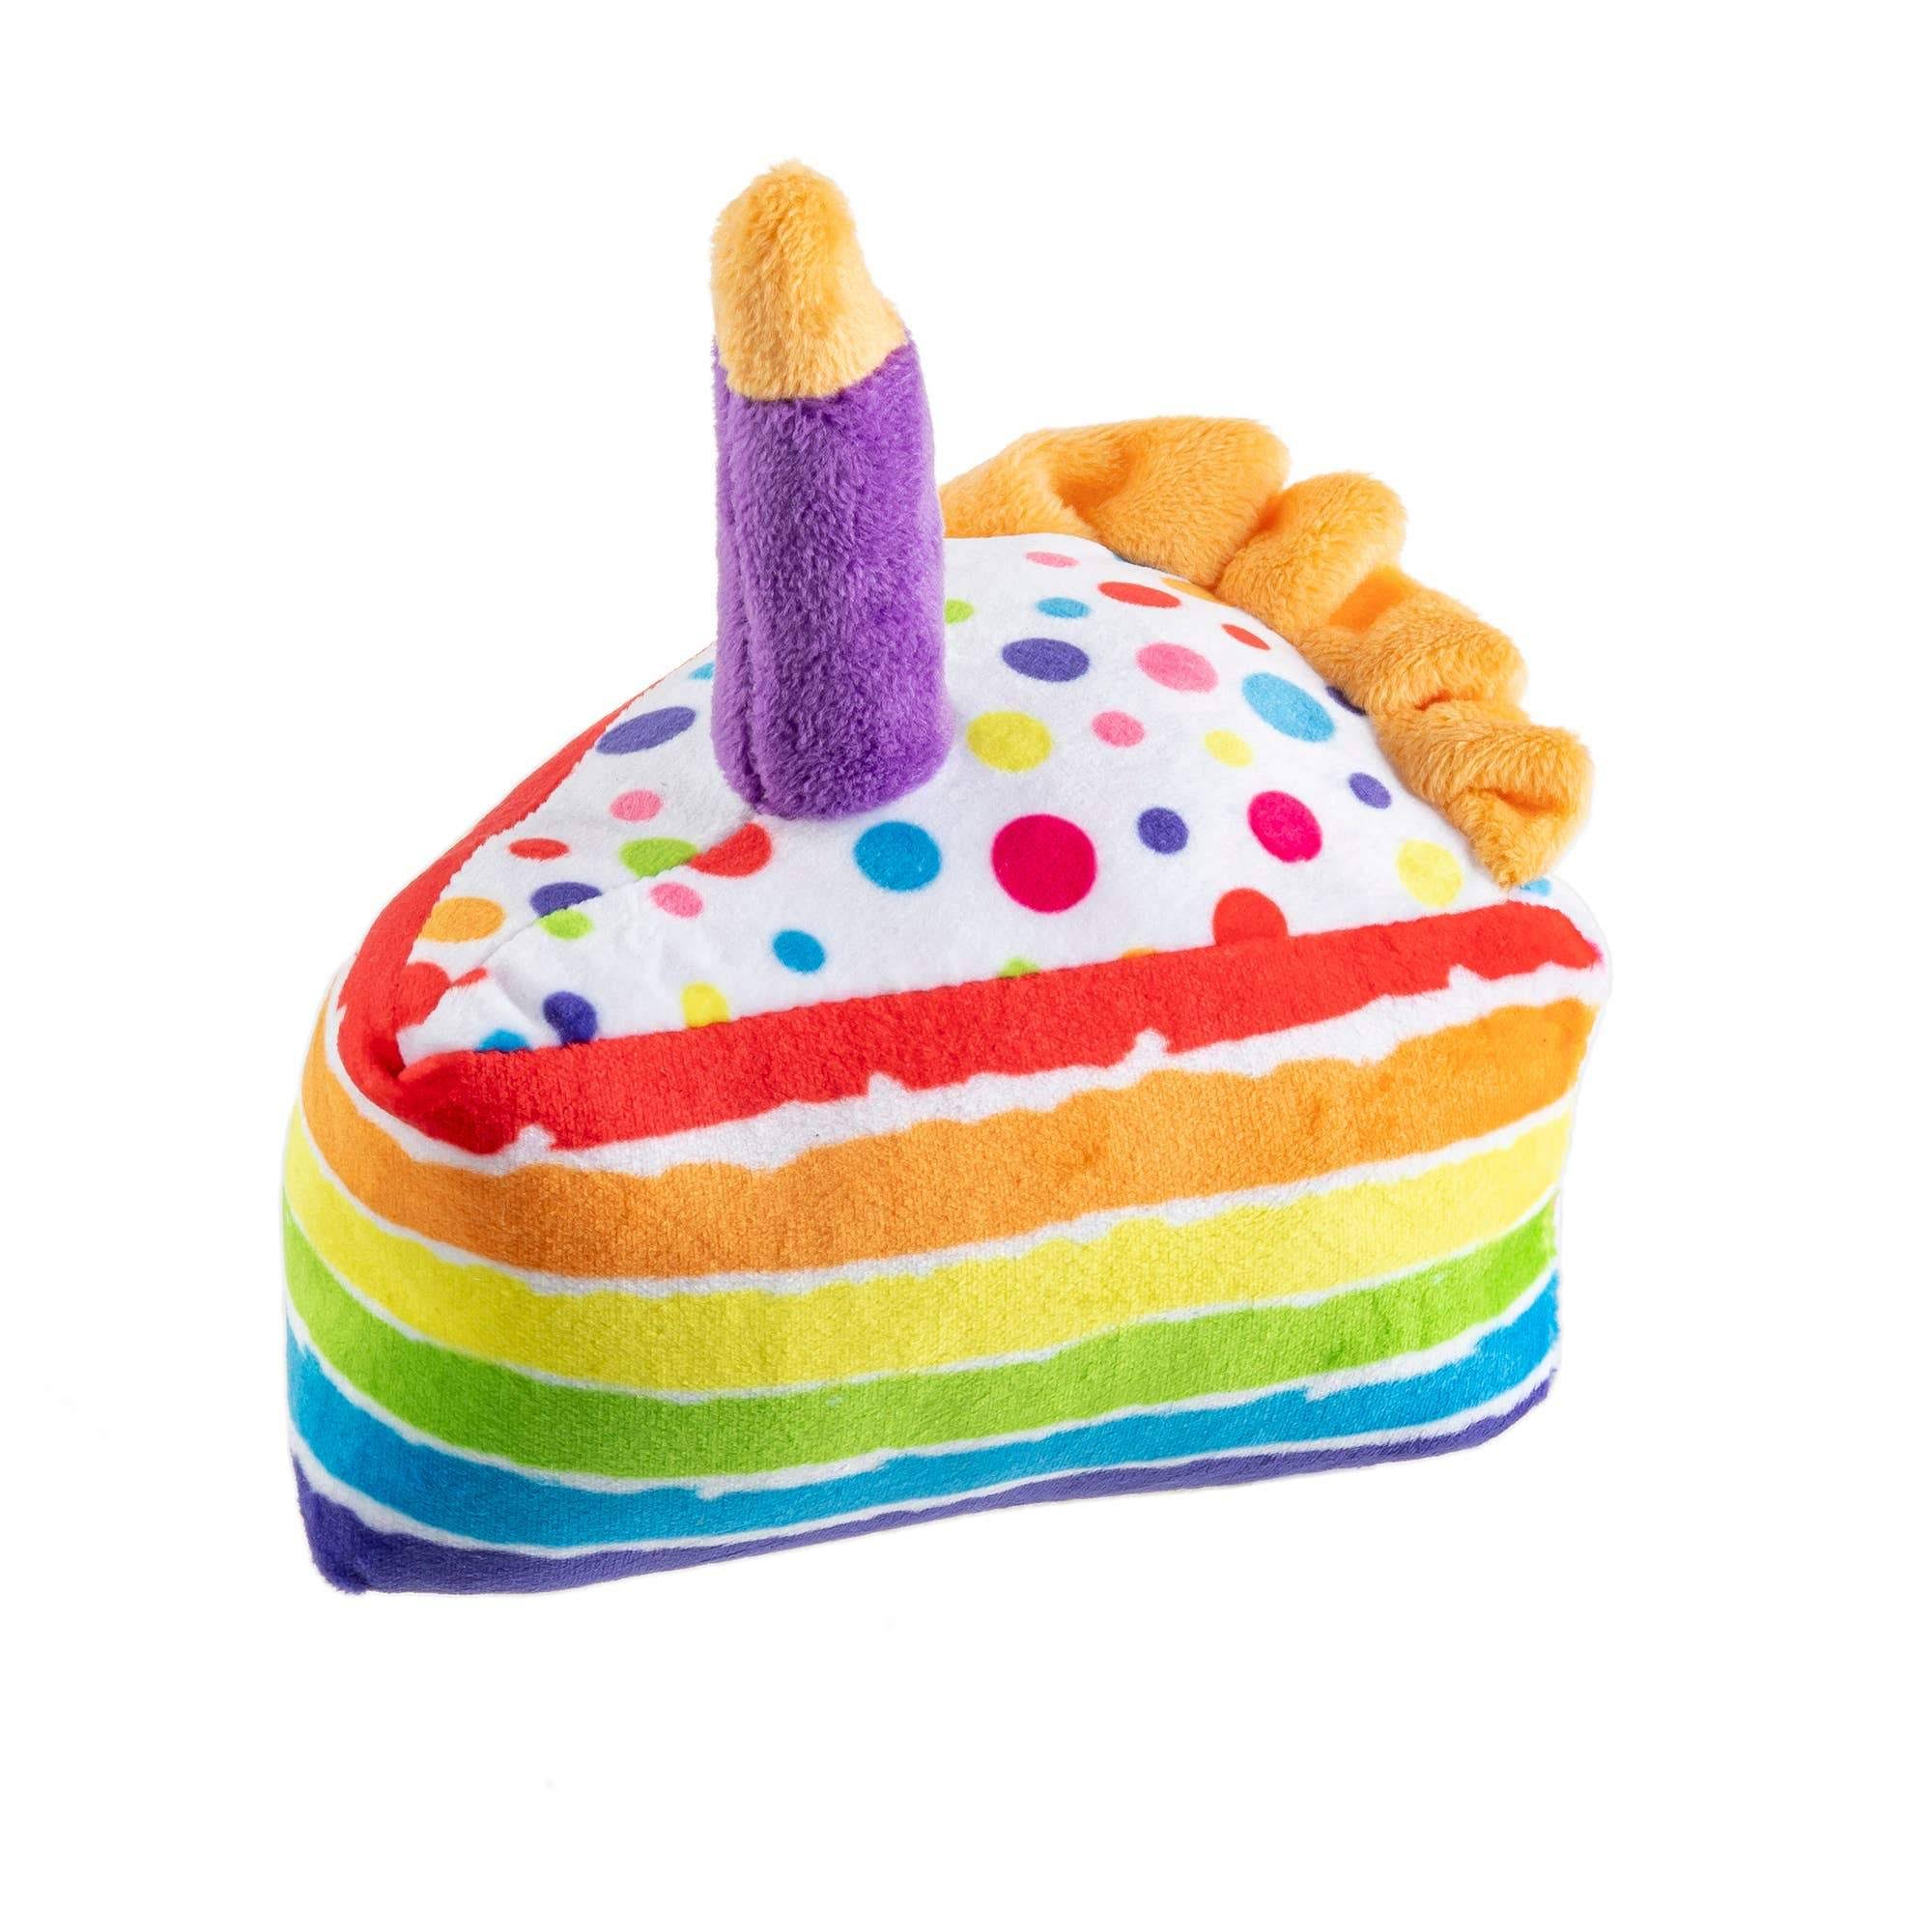 Happy Birthday Cake Slice Dog Toy by Haute Diggity Dog - One Size